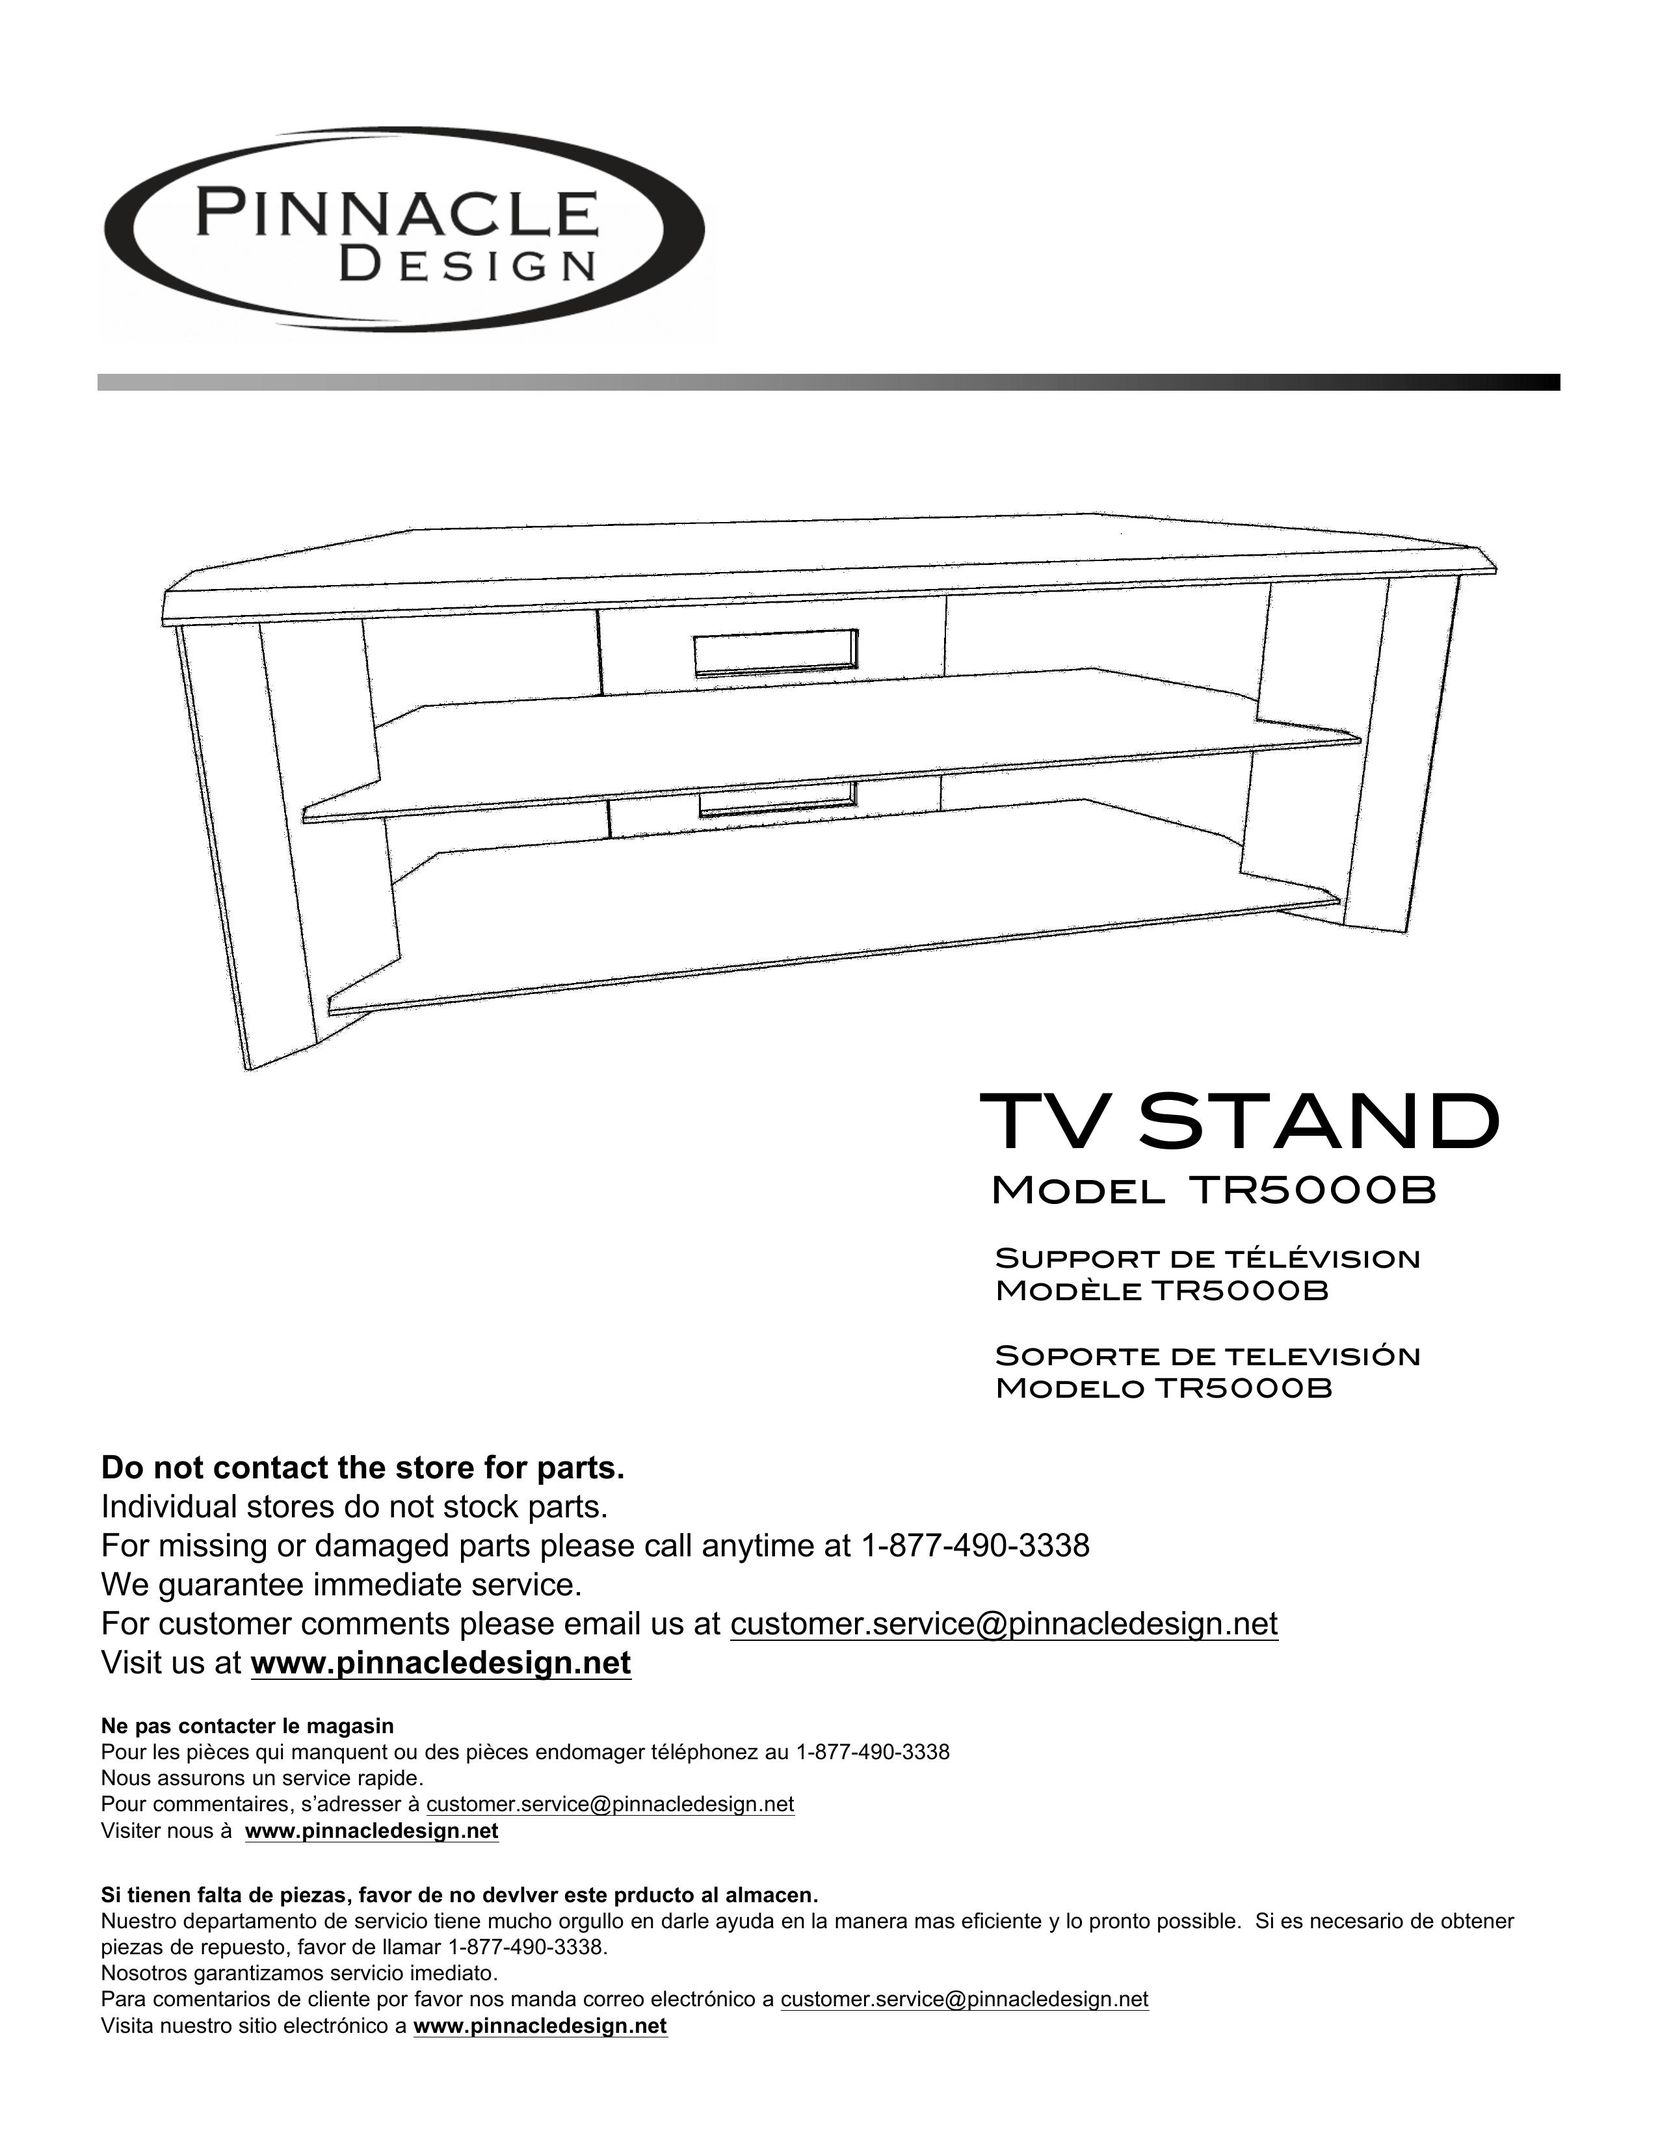 Pinnacle Design TR5000B TV Video Accessories User Manual